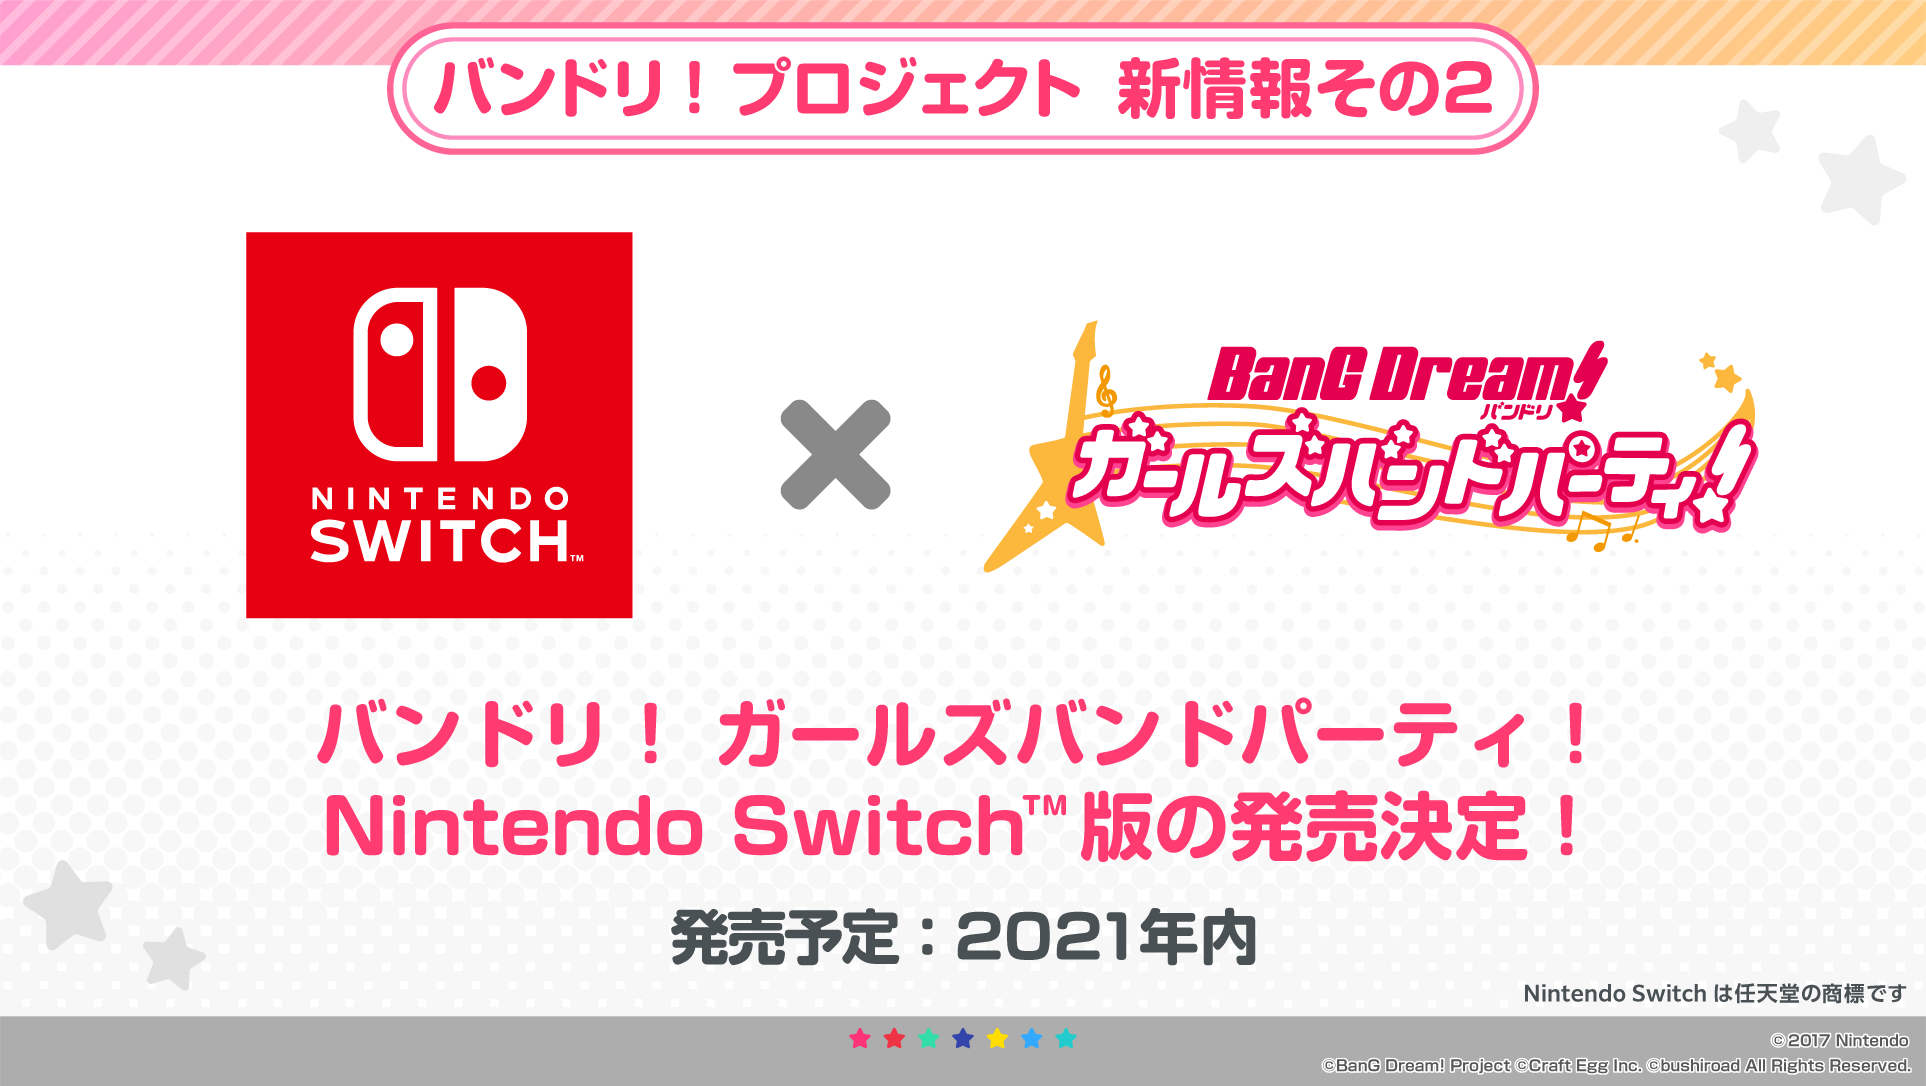 ※Nintendo Switchは任天堂の商標です。 (C)2017 Nintendo (C)BanG Dream! Project (C)Craft Egg Inc. (C)bushiroad All Rights Reserved.